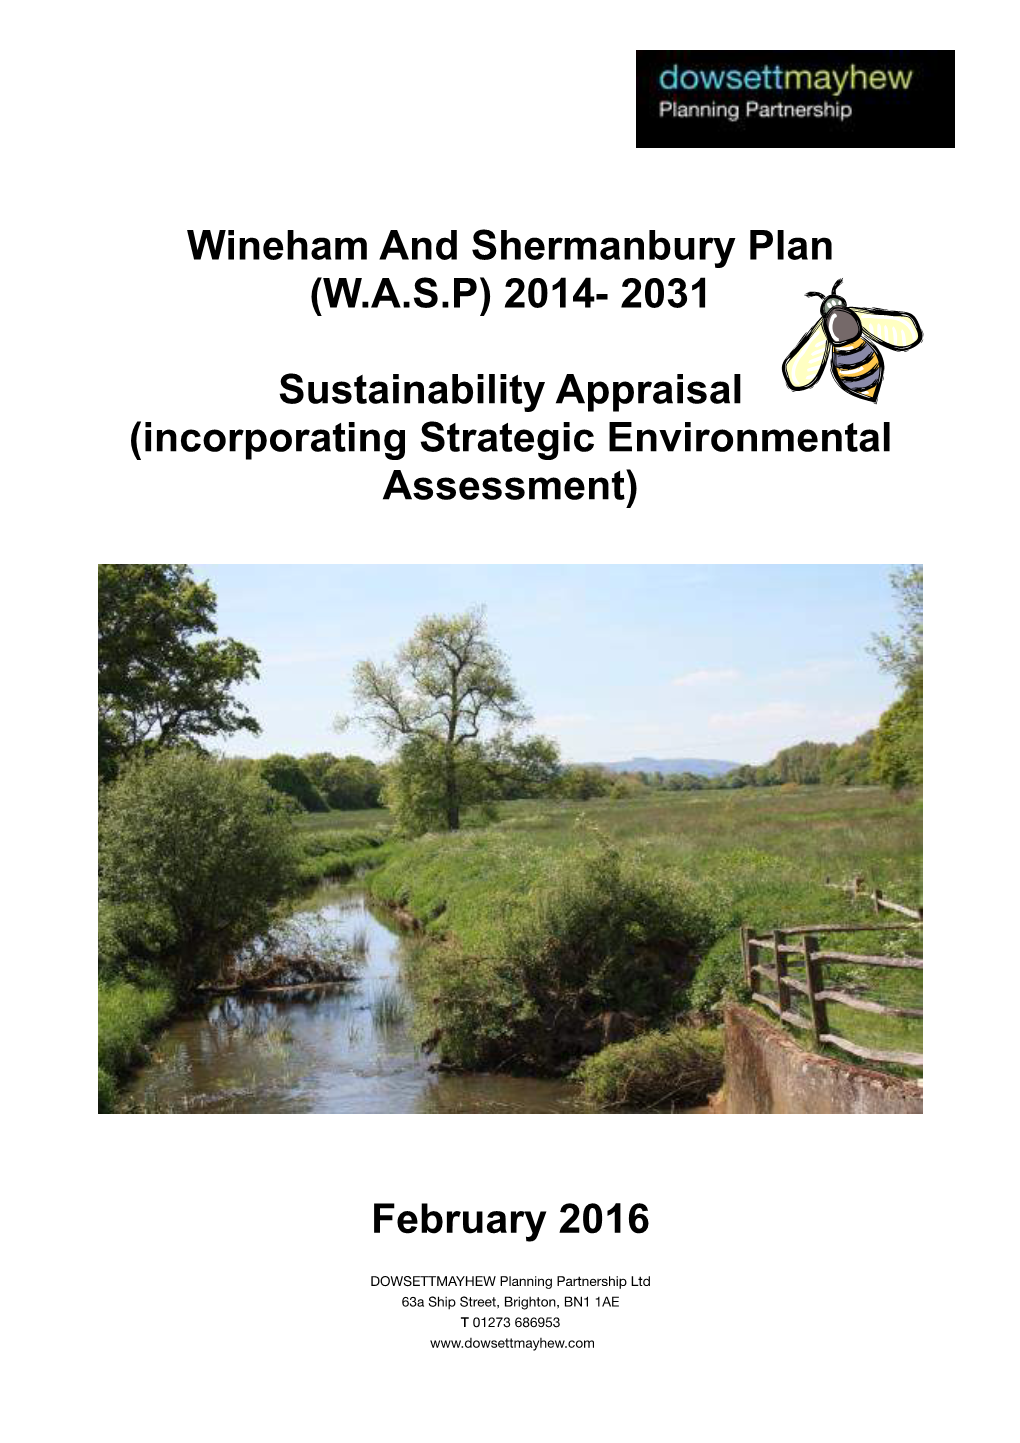 Wineham and Shermanbury Plan (W.A.S.P) 2014- 2031